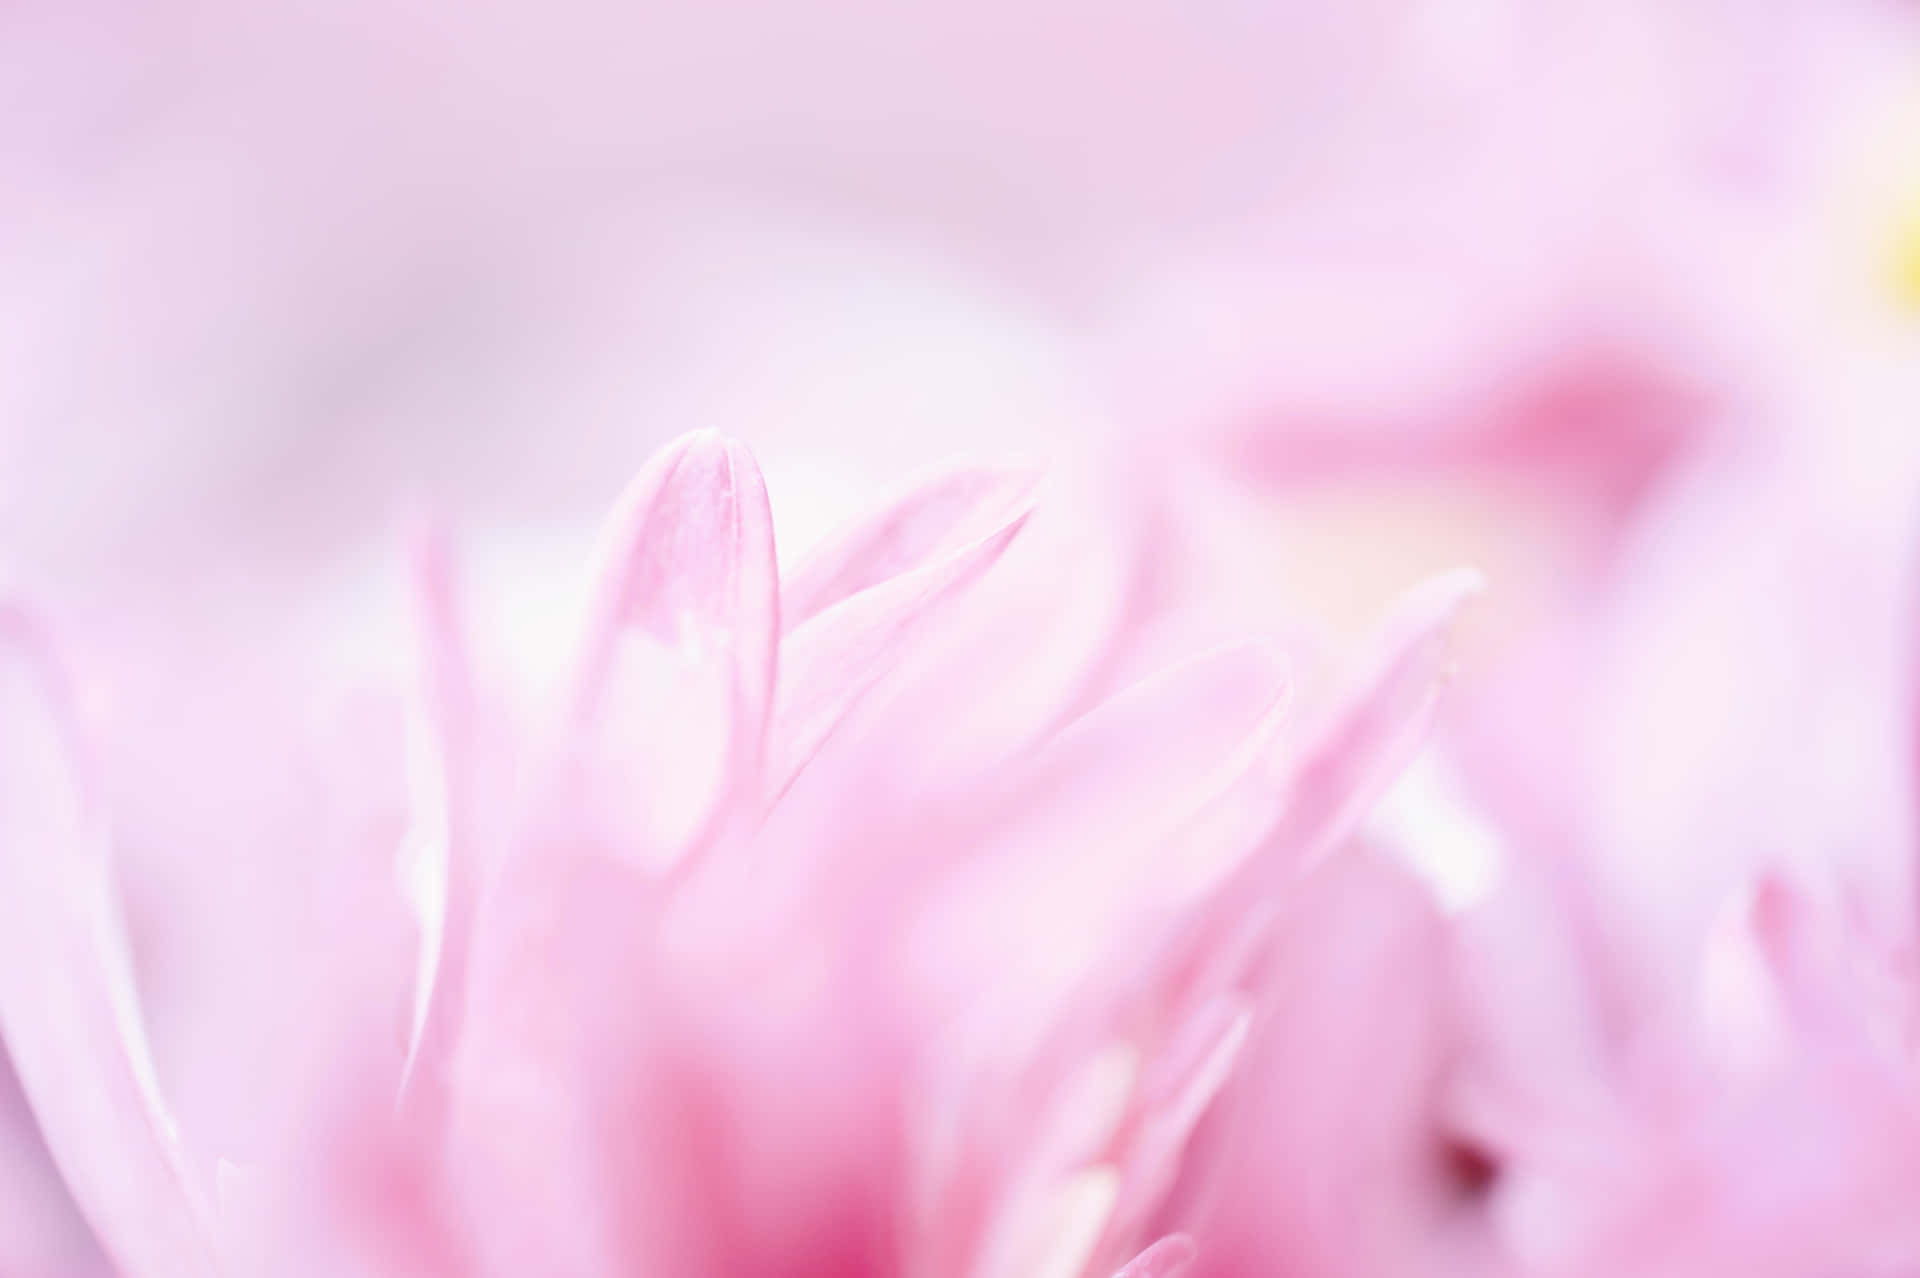 Soft pink blurred modern background